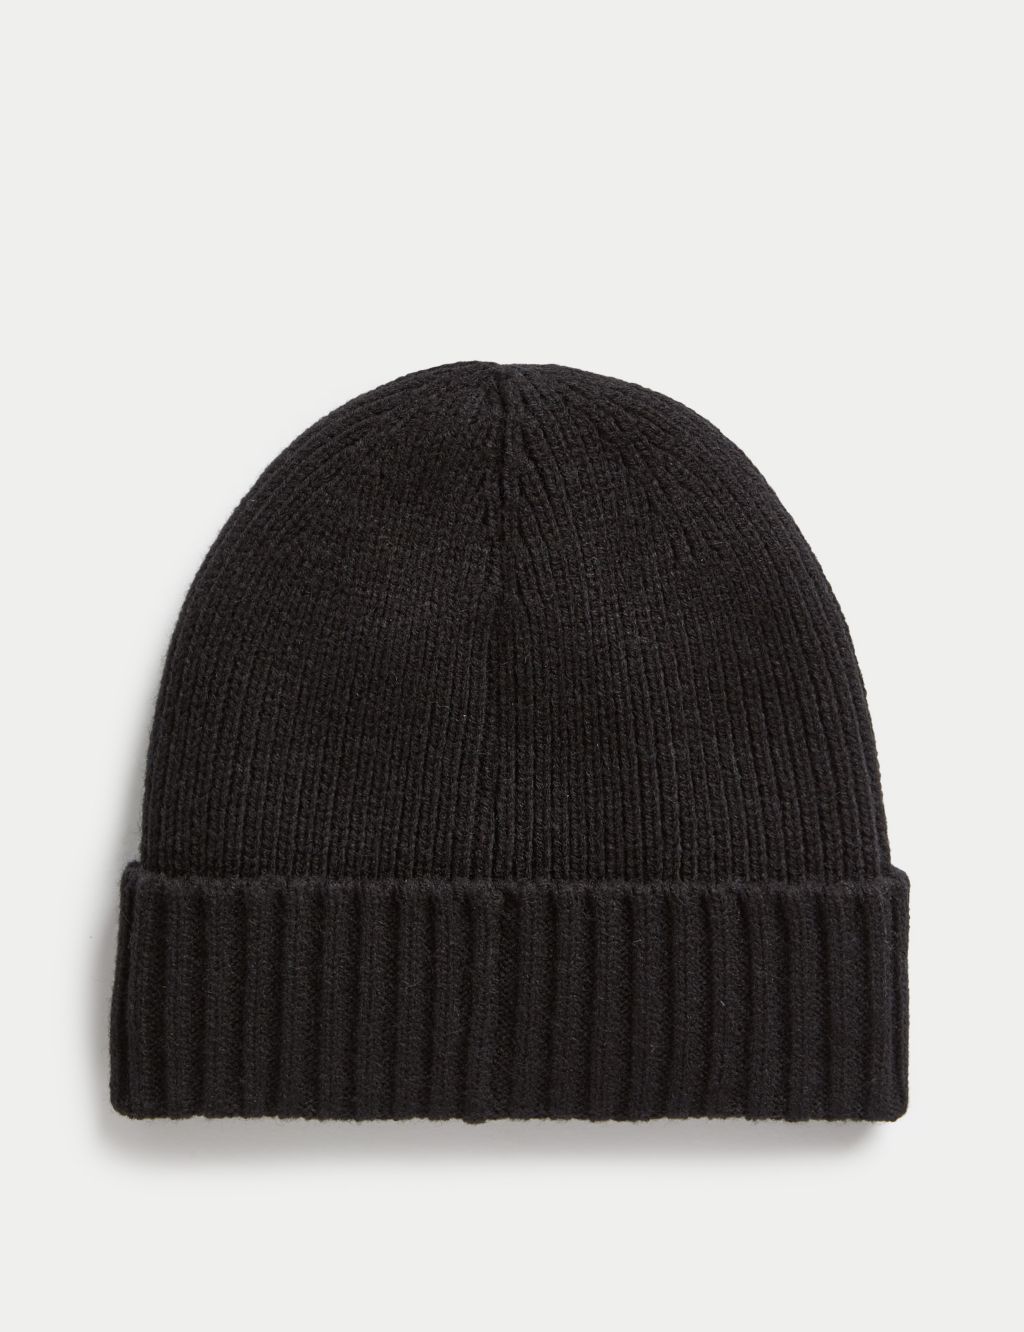 Wool Blend Beanie Hat image 1